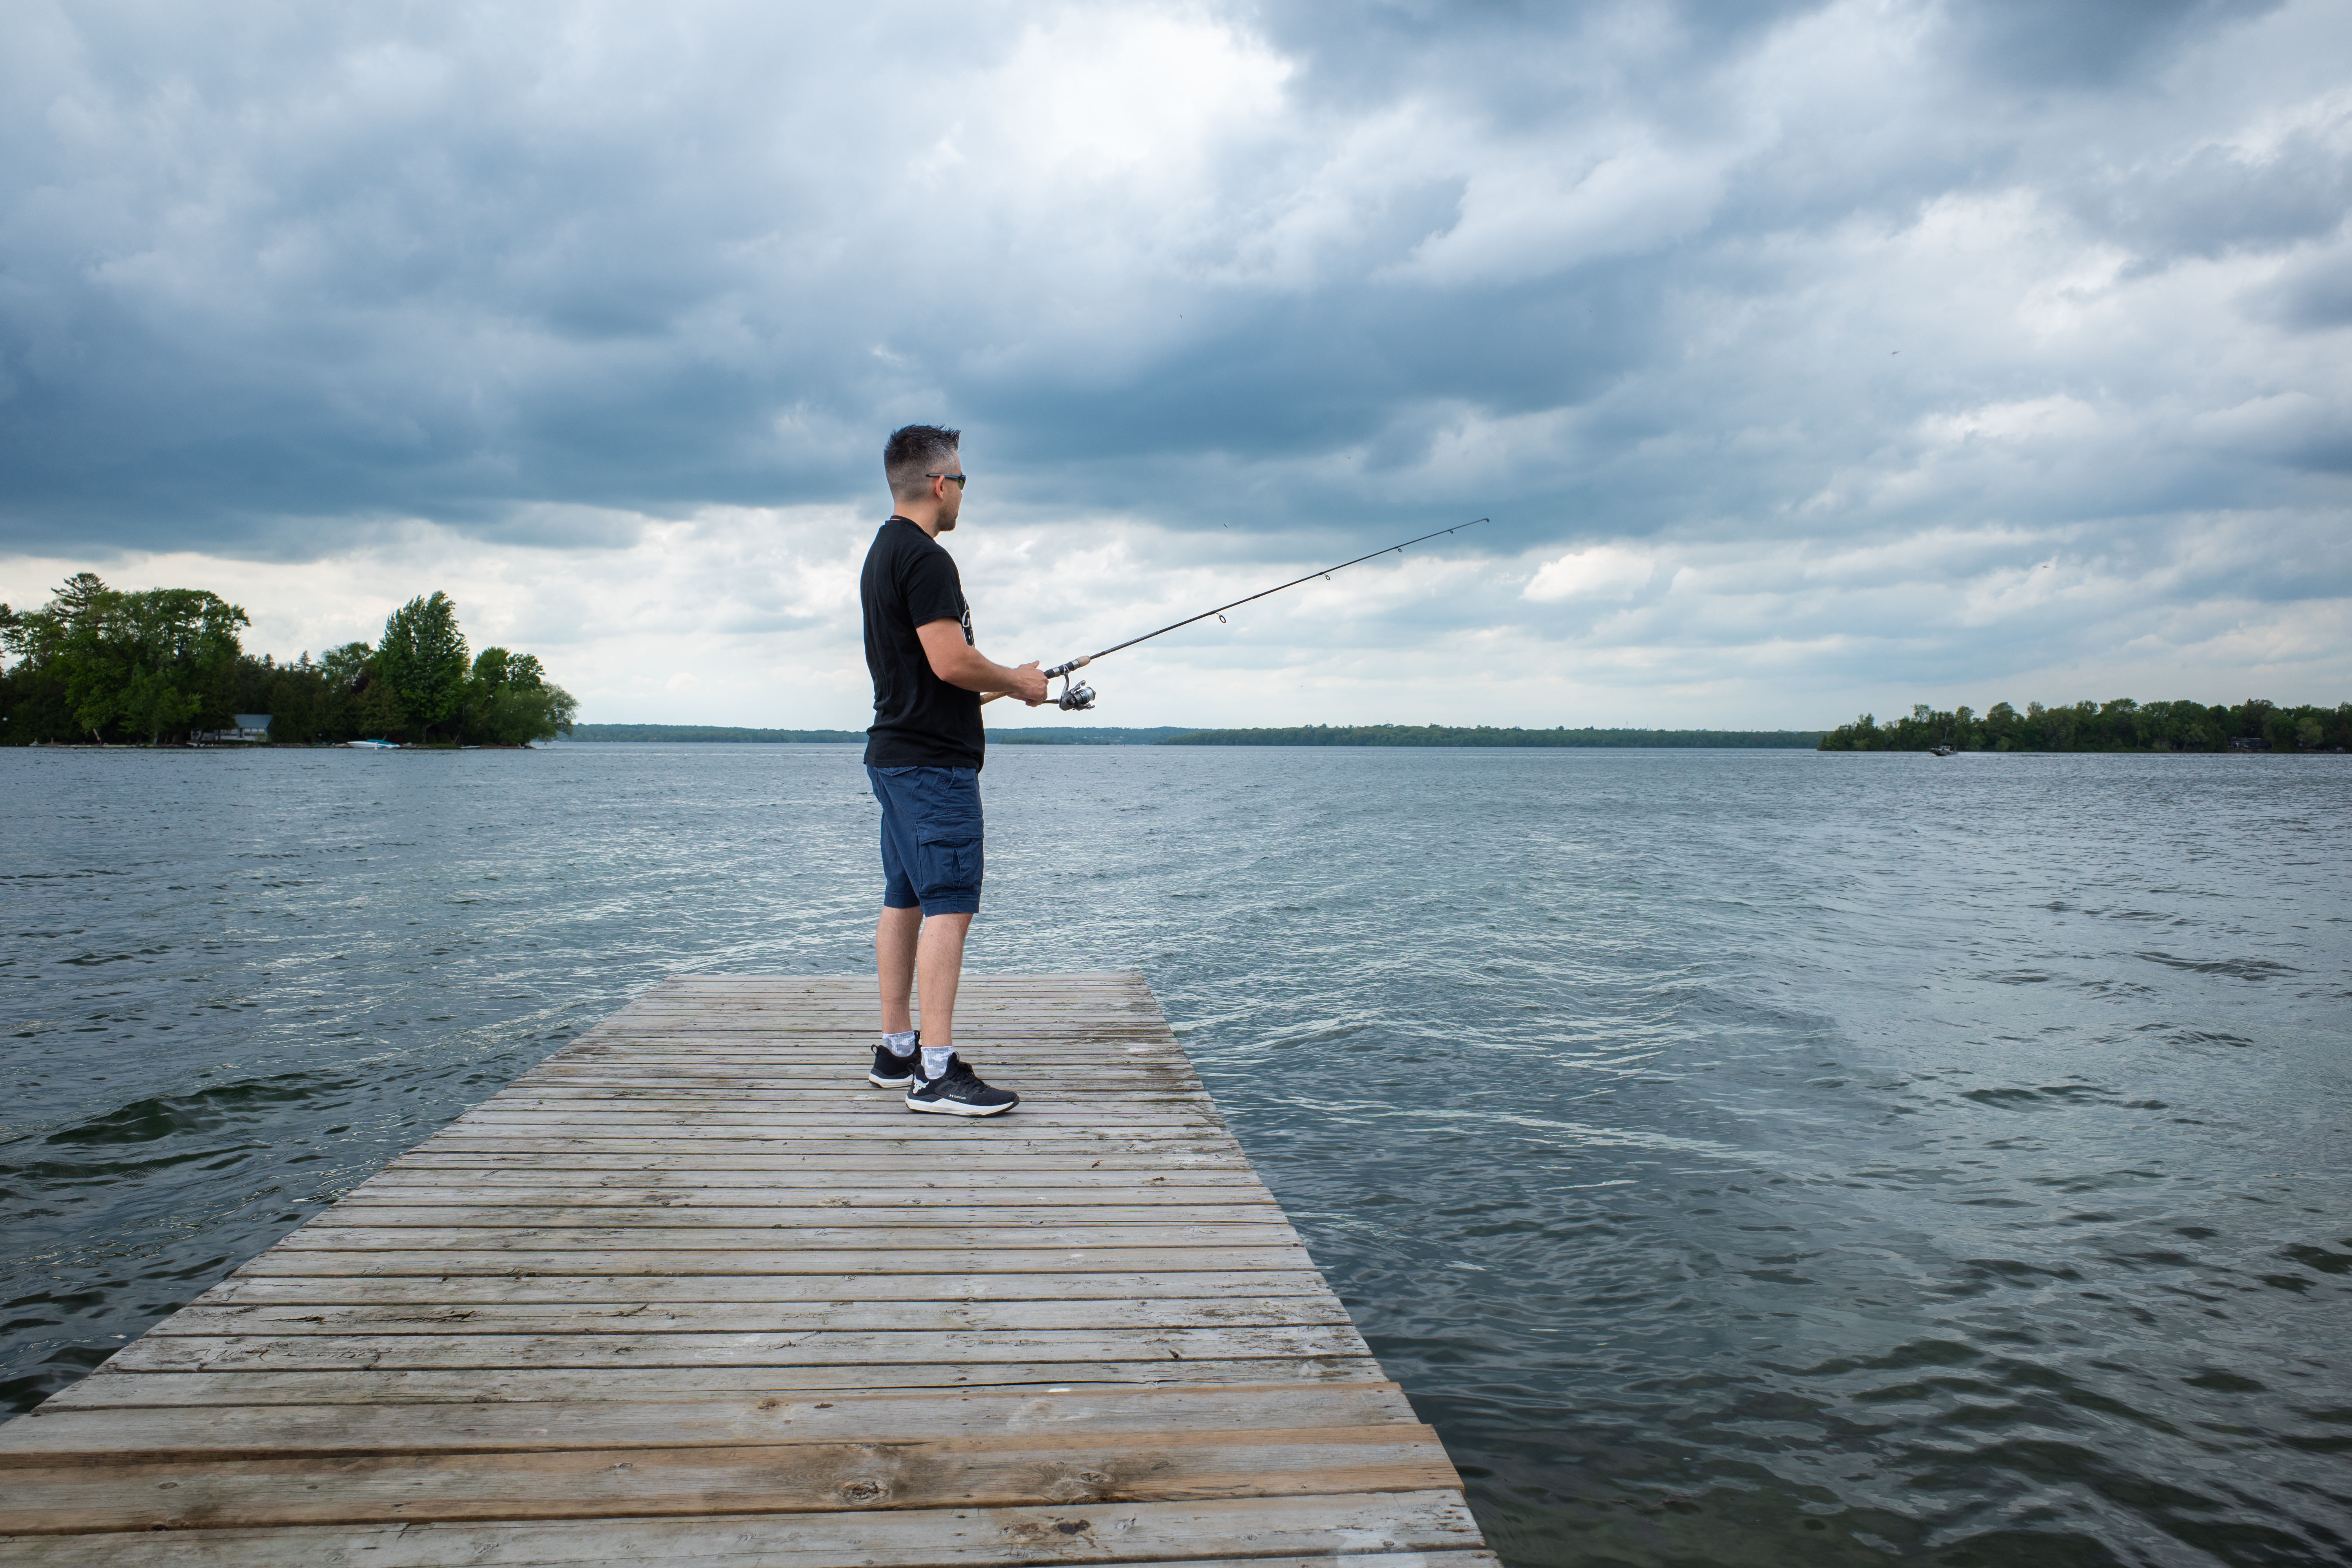 File:Fishing at lake Couchiching in Ontario, Canada.jpg - Wikimedia Commons